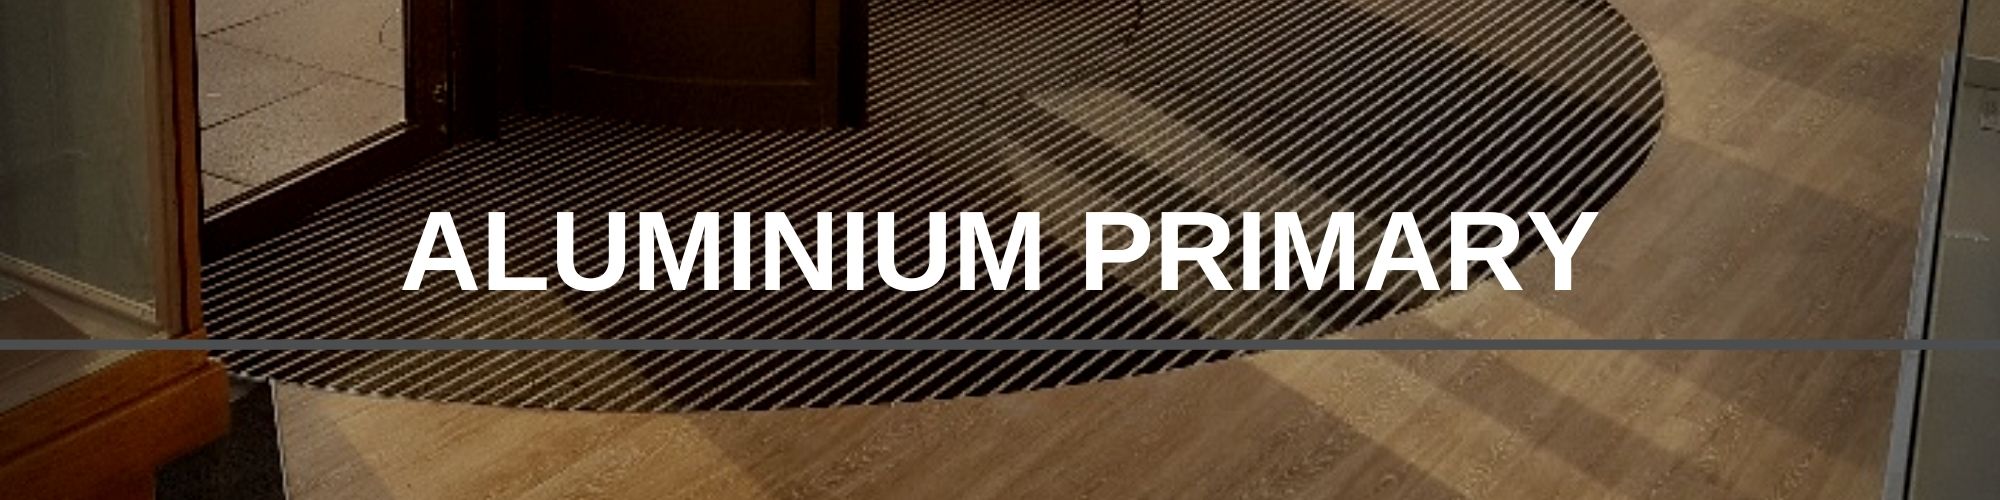 Aluminium Primary | Mat.Works Entrance Solutions | Entrance Matting